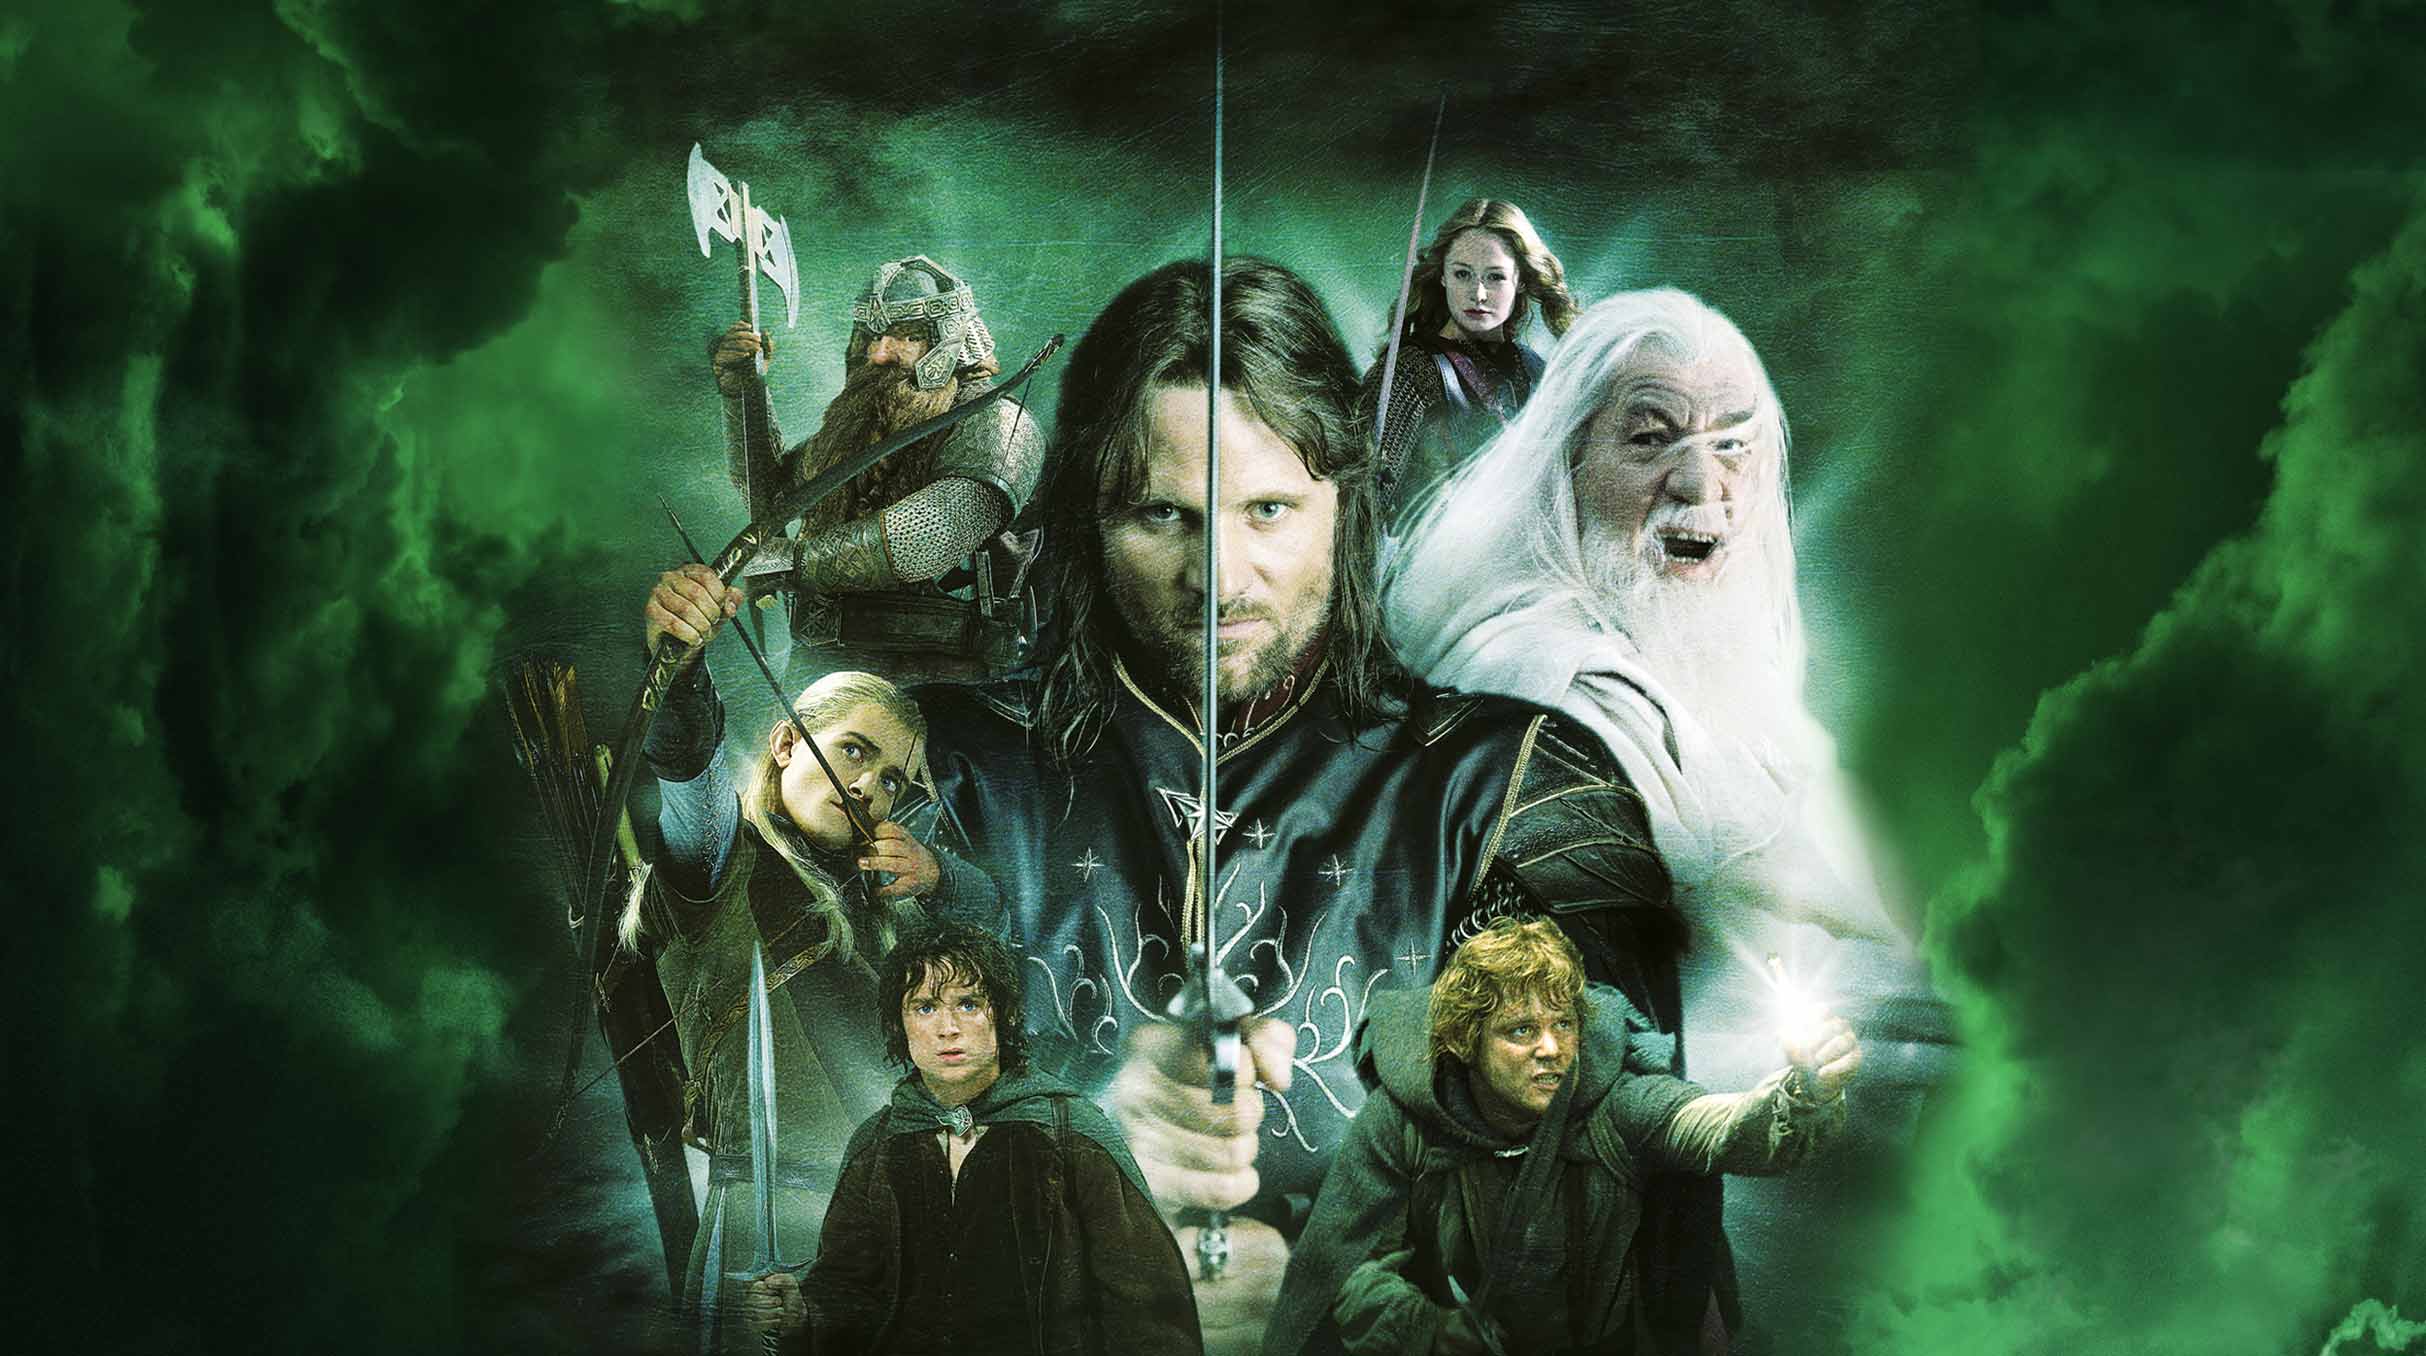 Lord of the Rings: The Return of the King- Praha -O2 universum Praha 9 Českomoravská 2345/17, Praha 9 19000